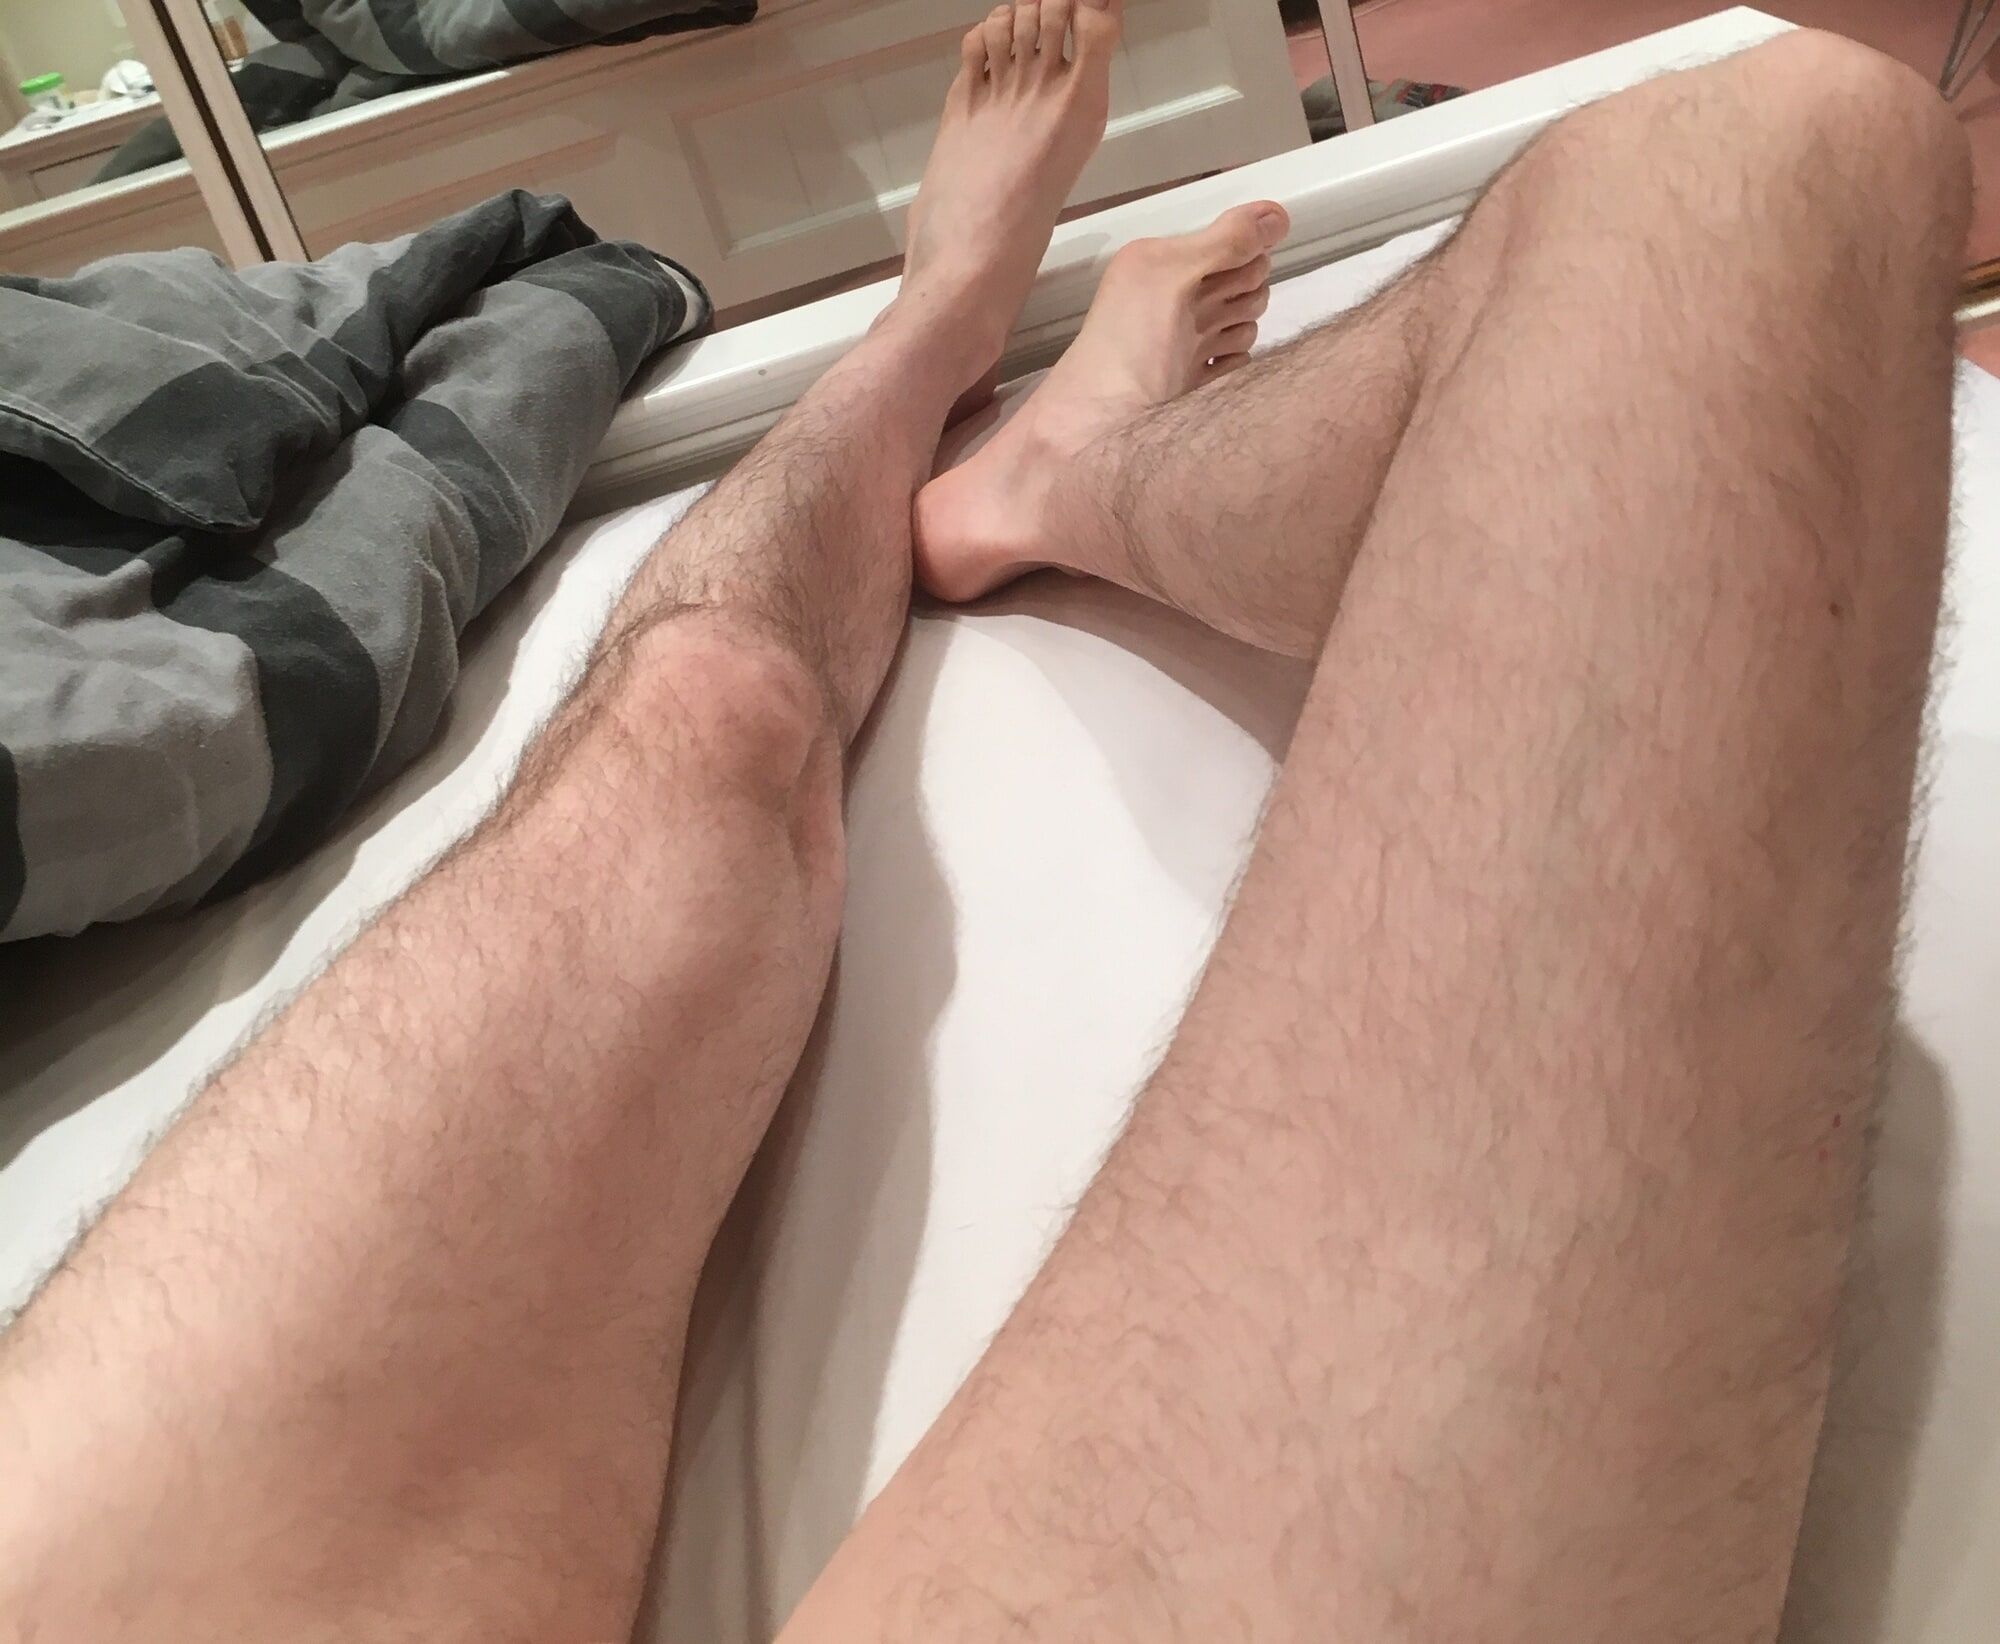 My beautiful long legs and big cock